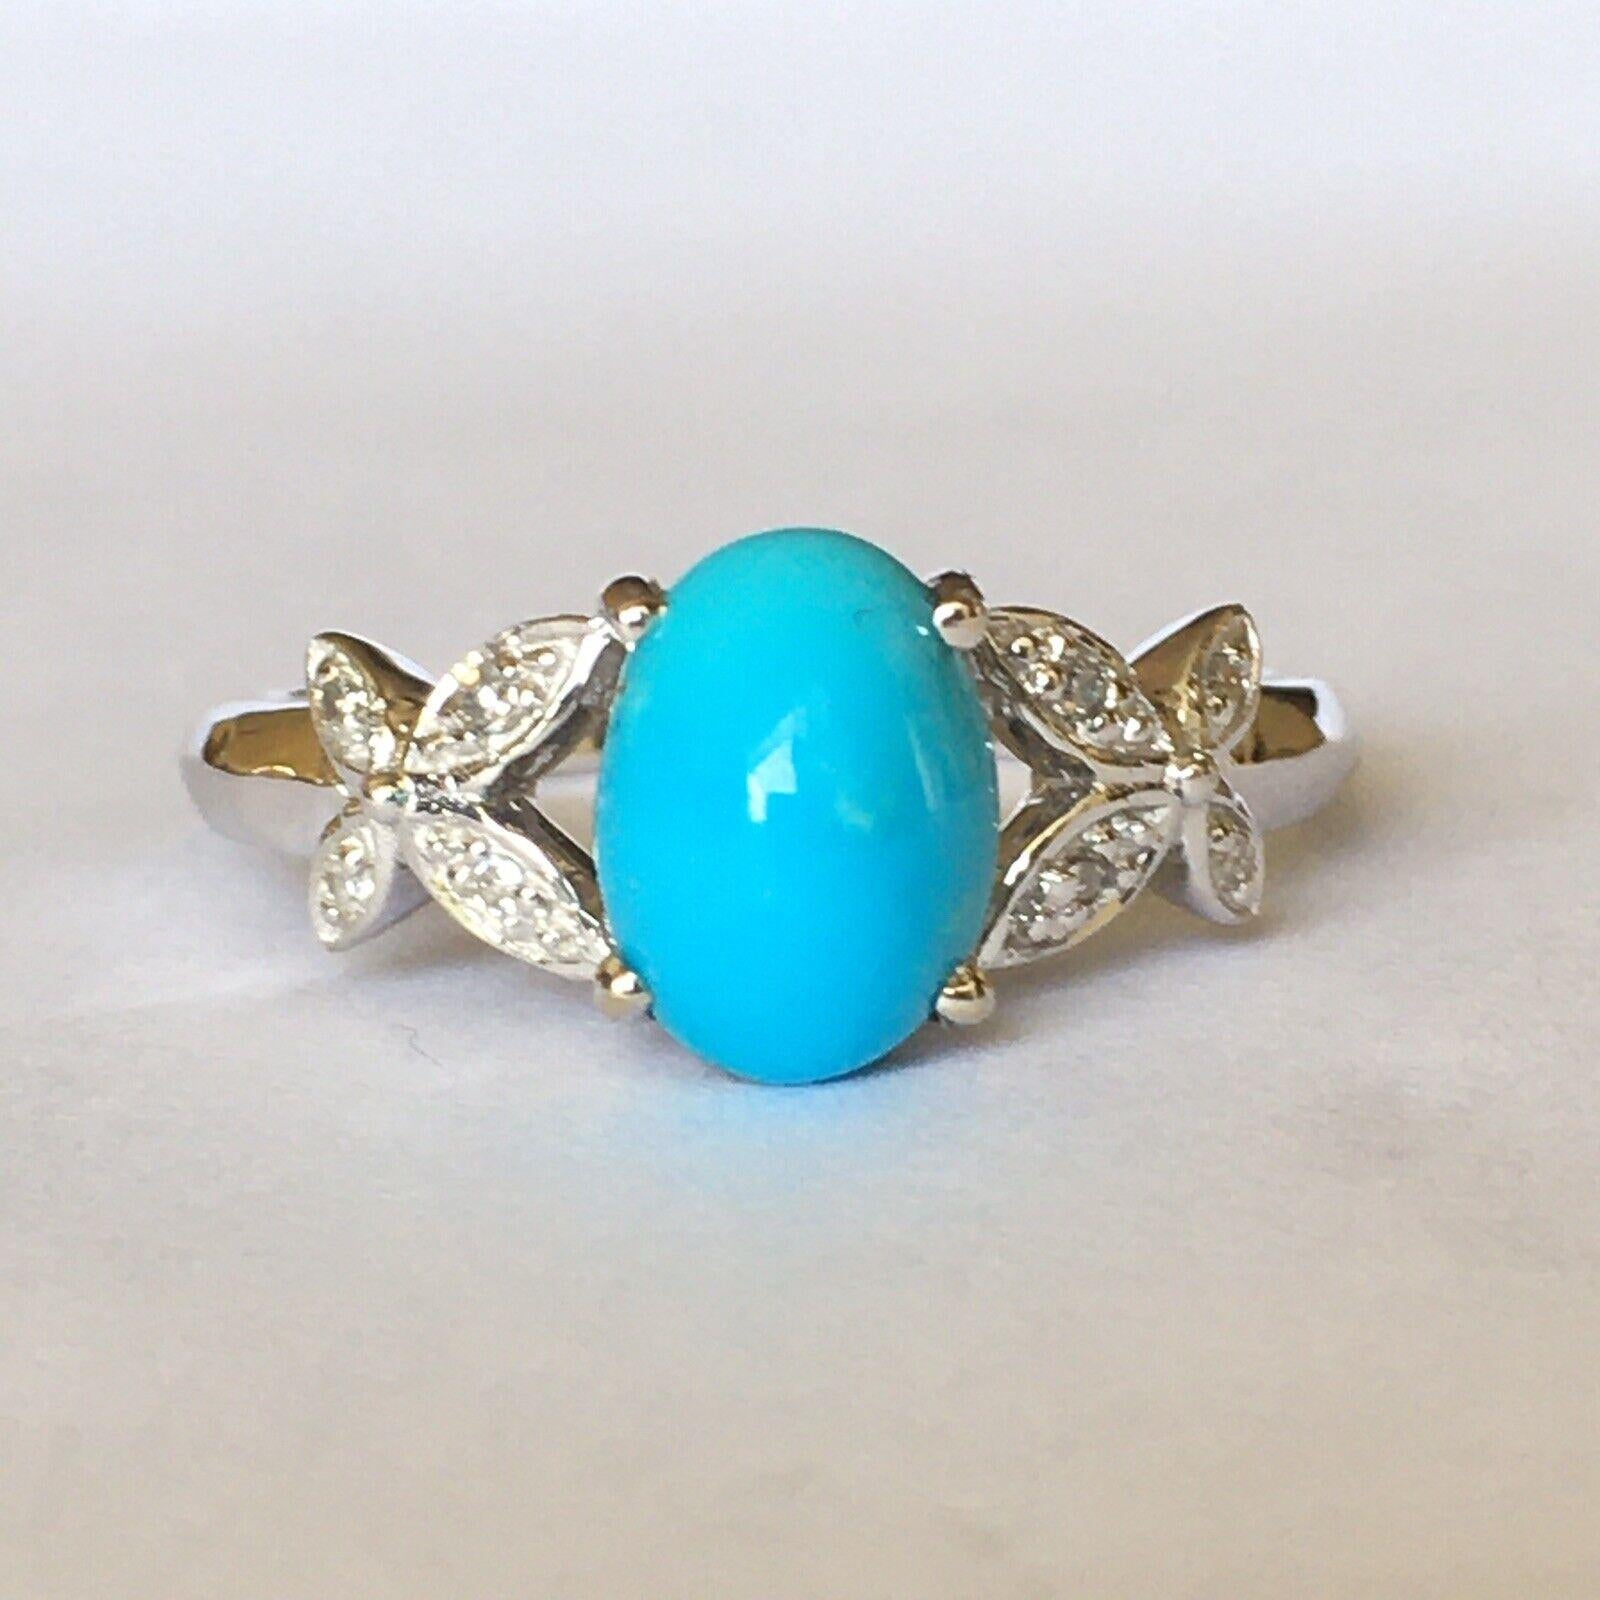 14 Karat White Gold Hallmarked Lady's Diamond Persian Turquoise Ring 1970s Size For Sale 4